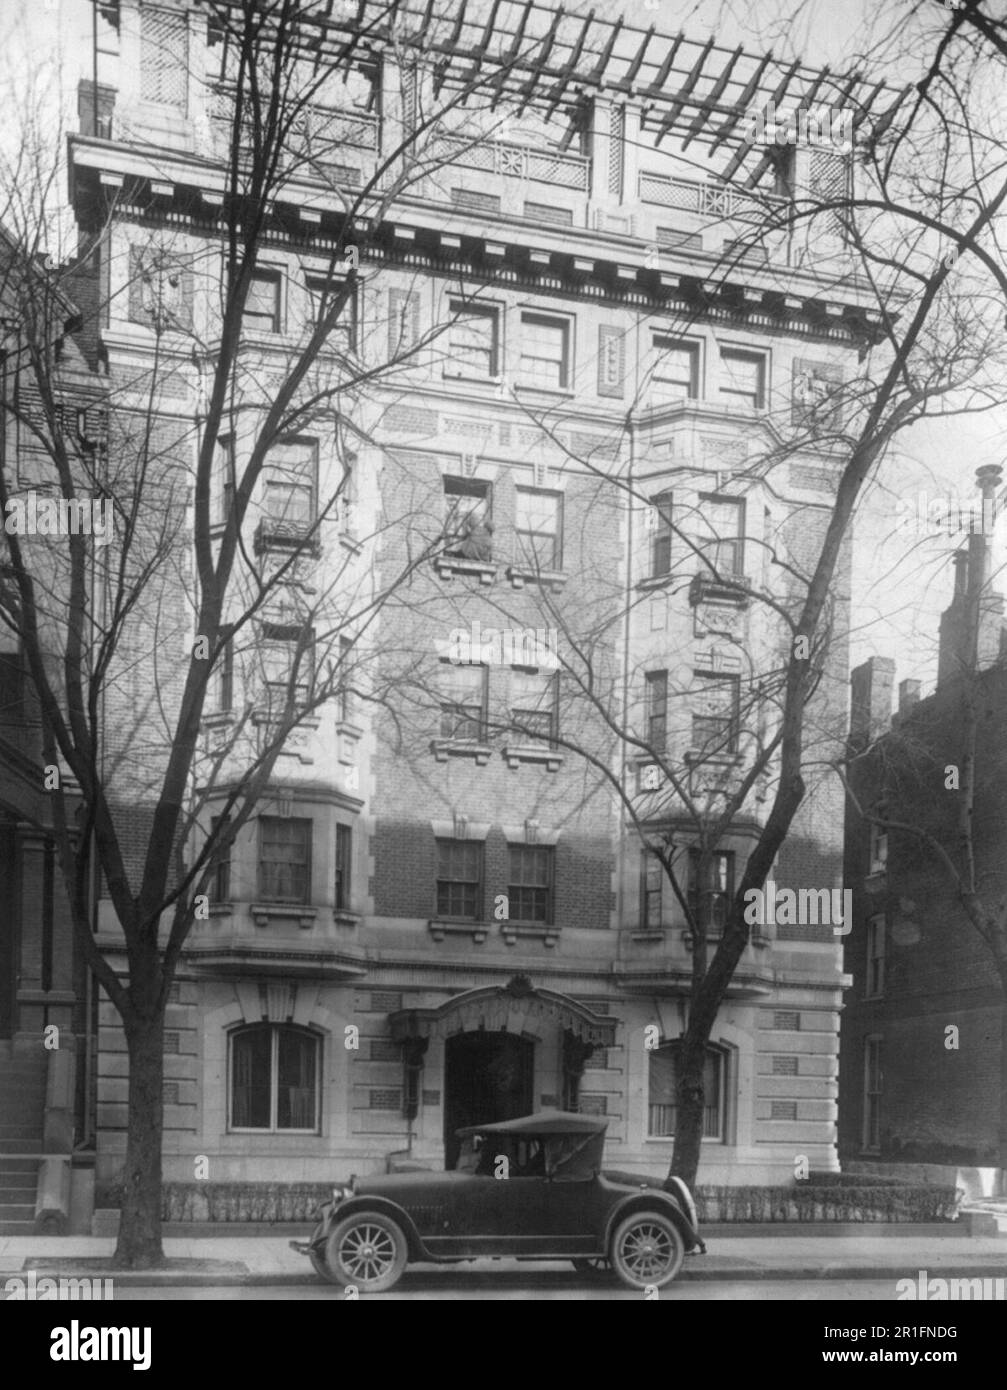 Foto d'archivio: 'The Bachelor', un appartamento a 1737 H Street, N.W. Washington, D.C. ca. 1920 Foto Stock